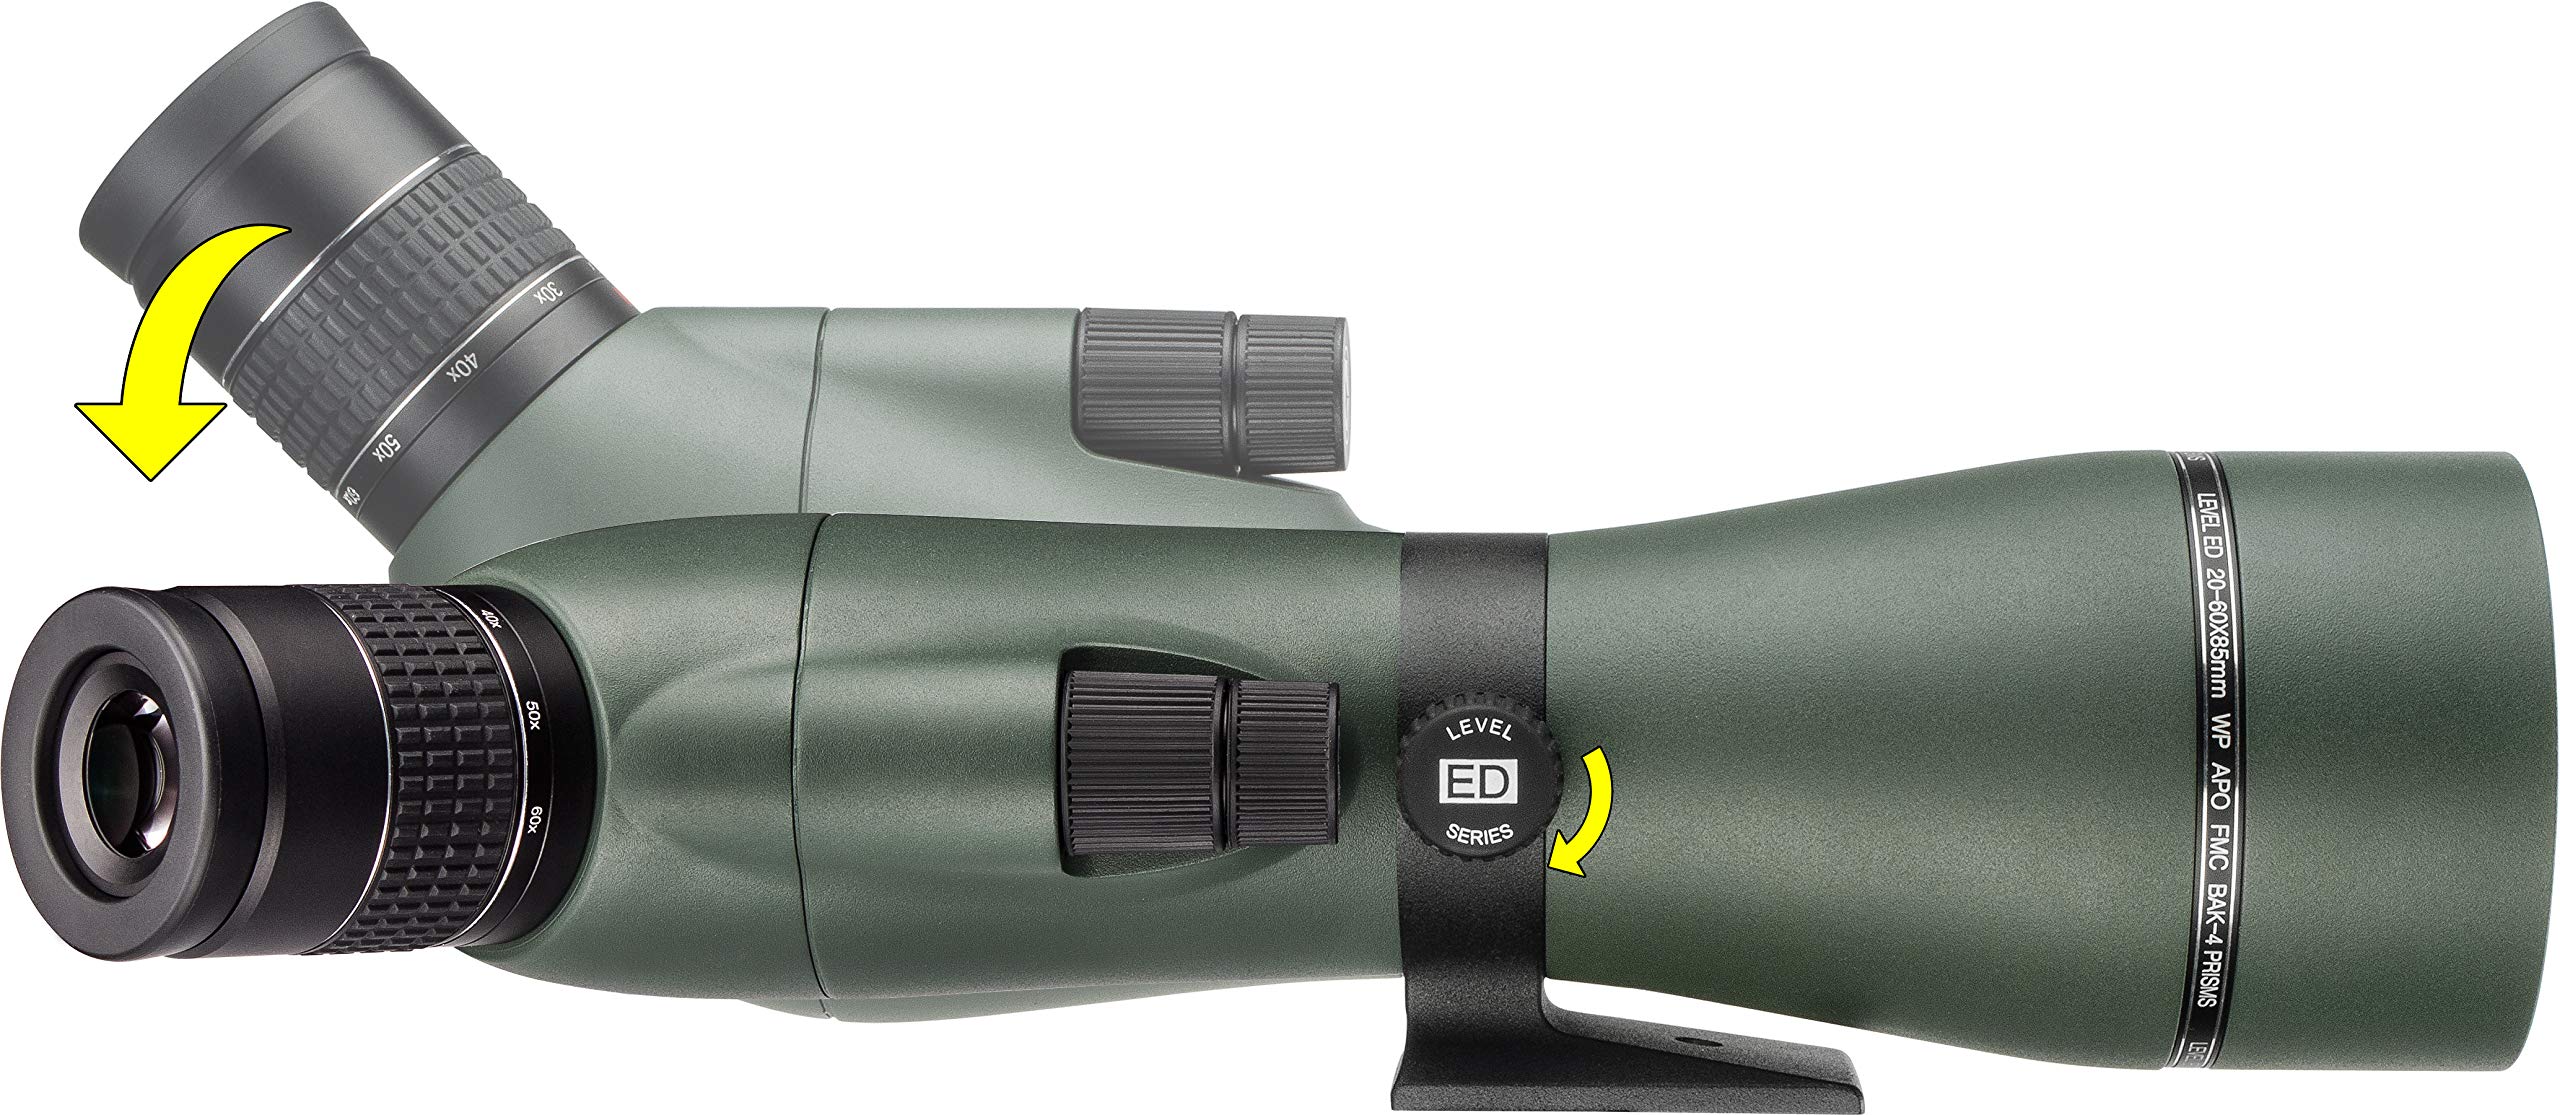 Barska Level ED 20-60x85mm Spotting Scope with Carrying Case